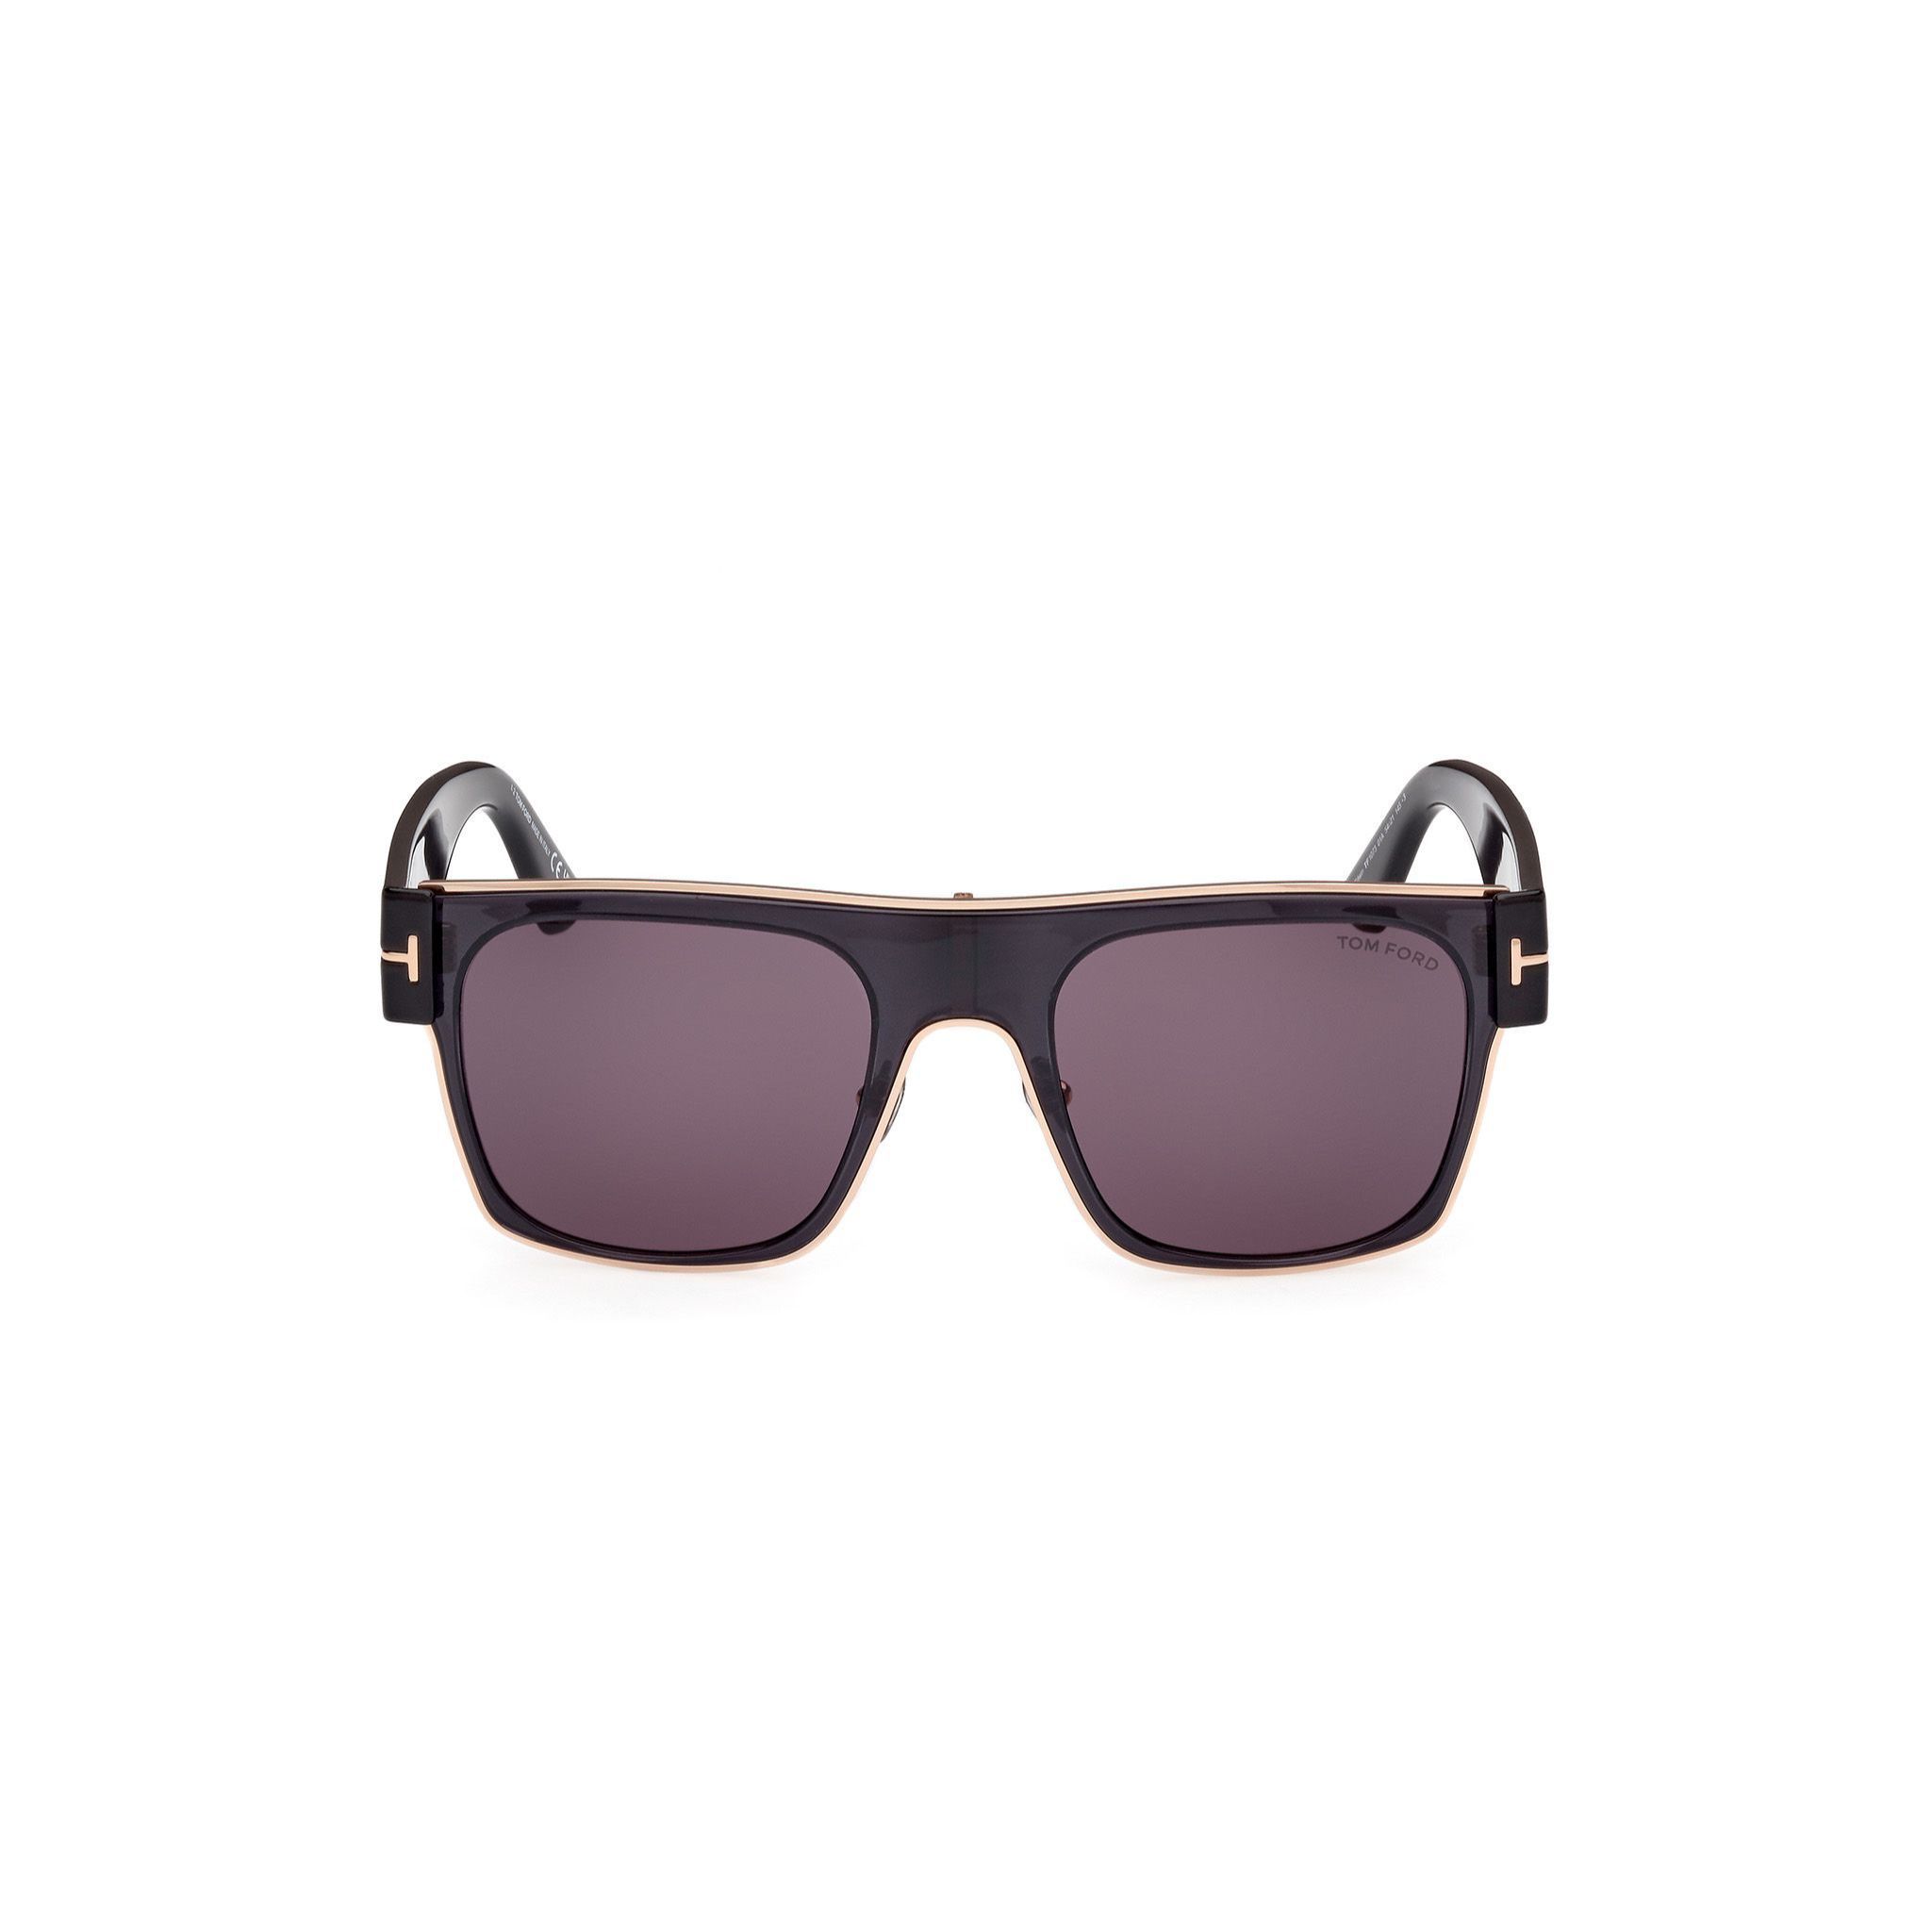 FT1073 Square Sunglasses 01A - size 54